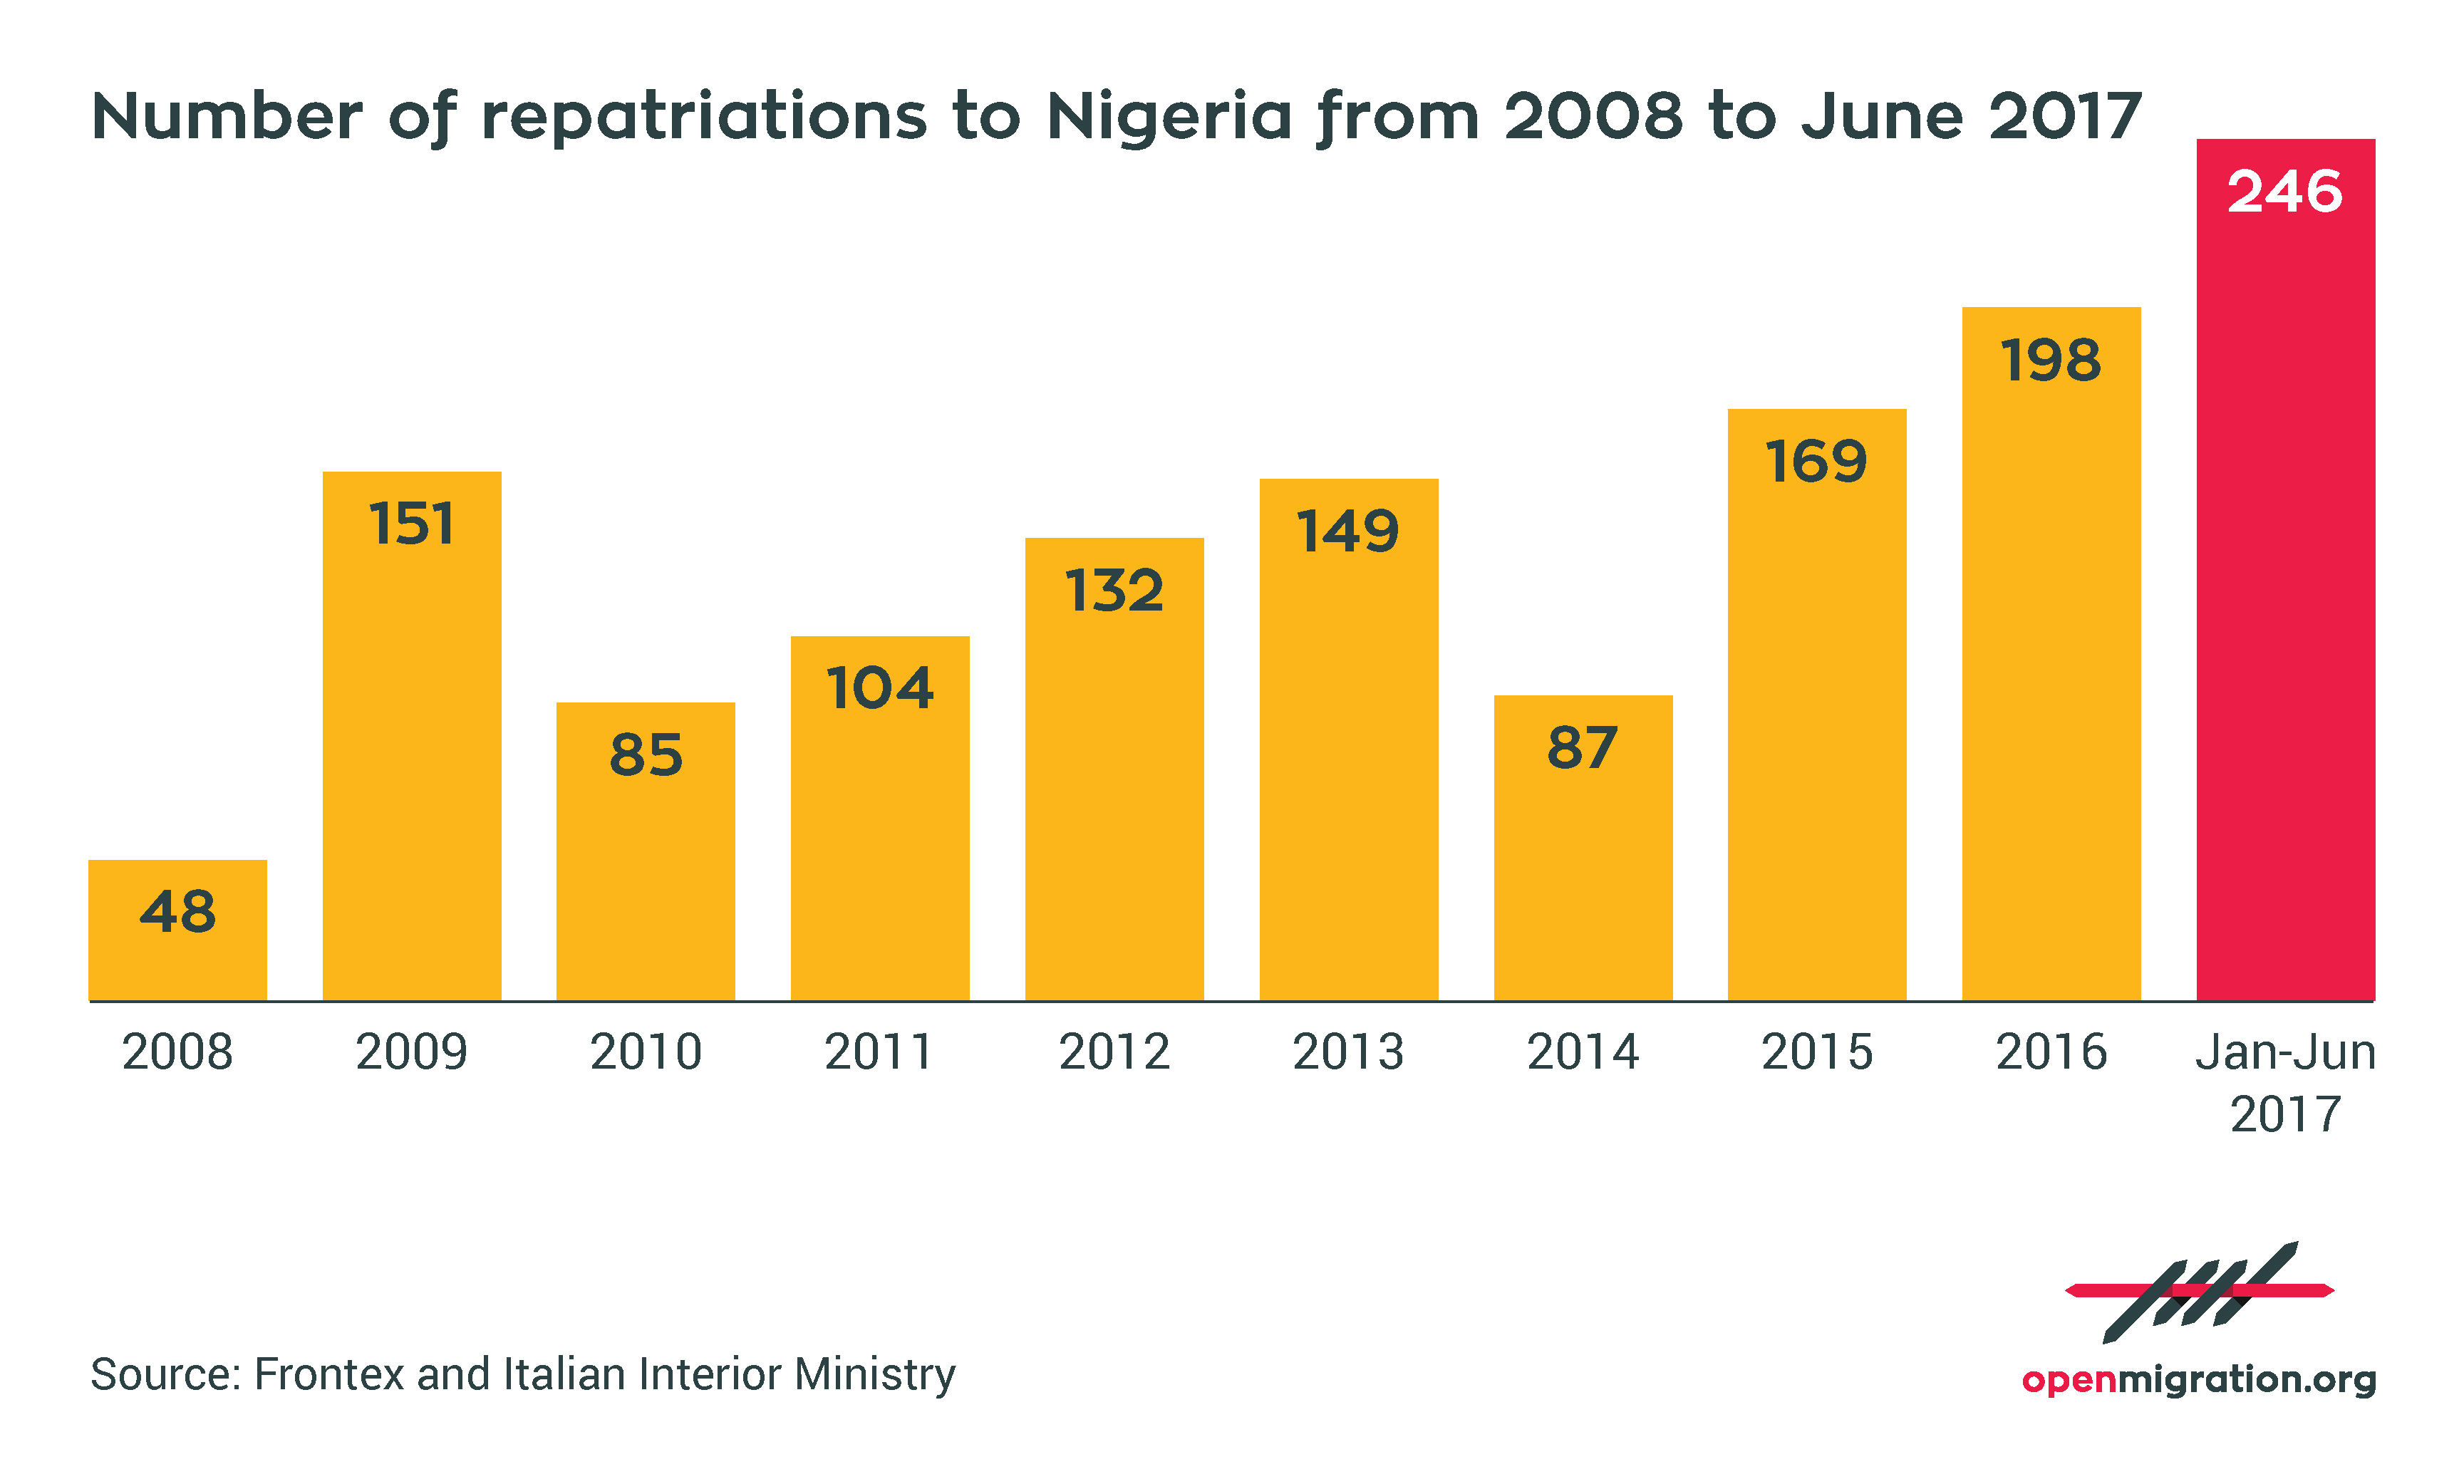 Repatriations to Nigeria, 2008-2017